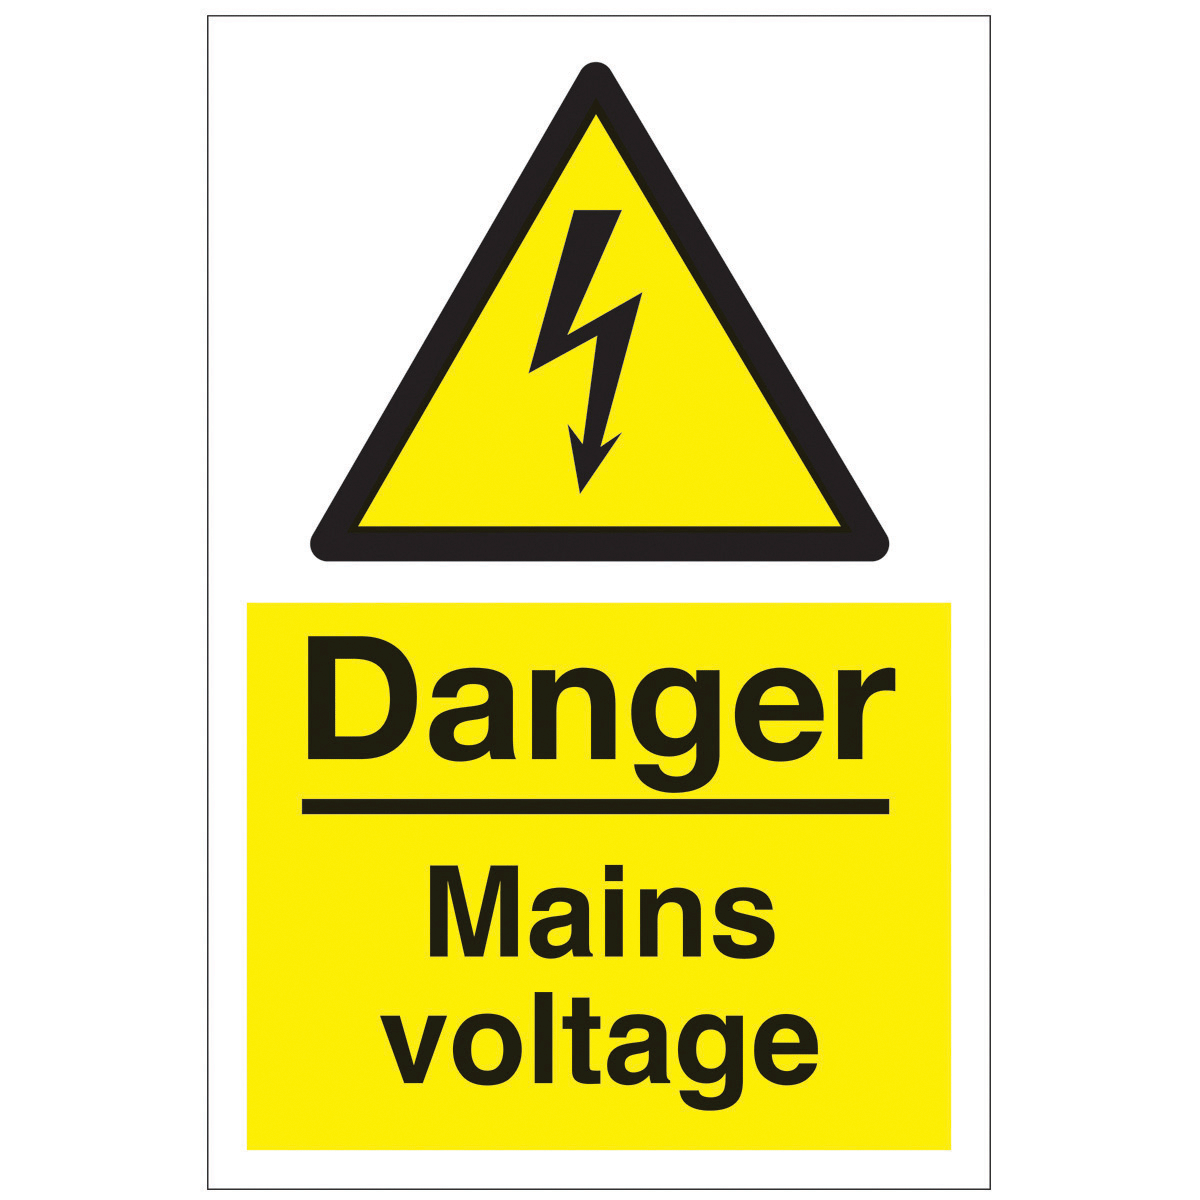 Danger Mains Voltage Safety Sign - Hazard & Warning Sign from ...